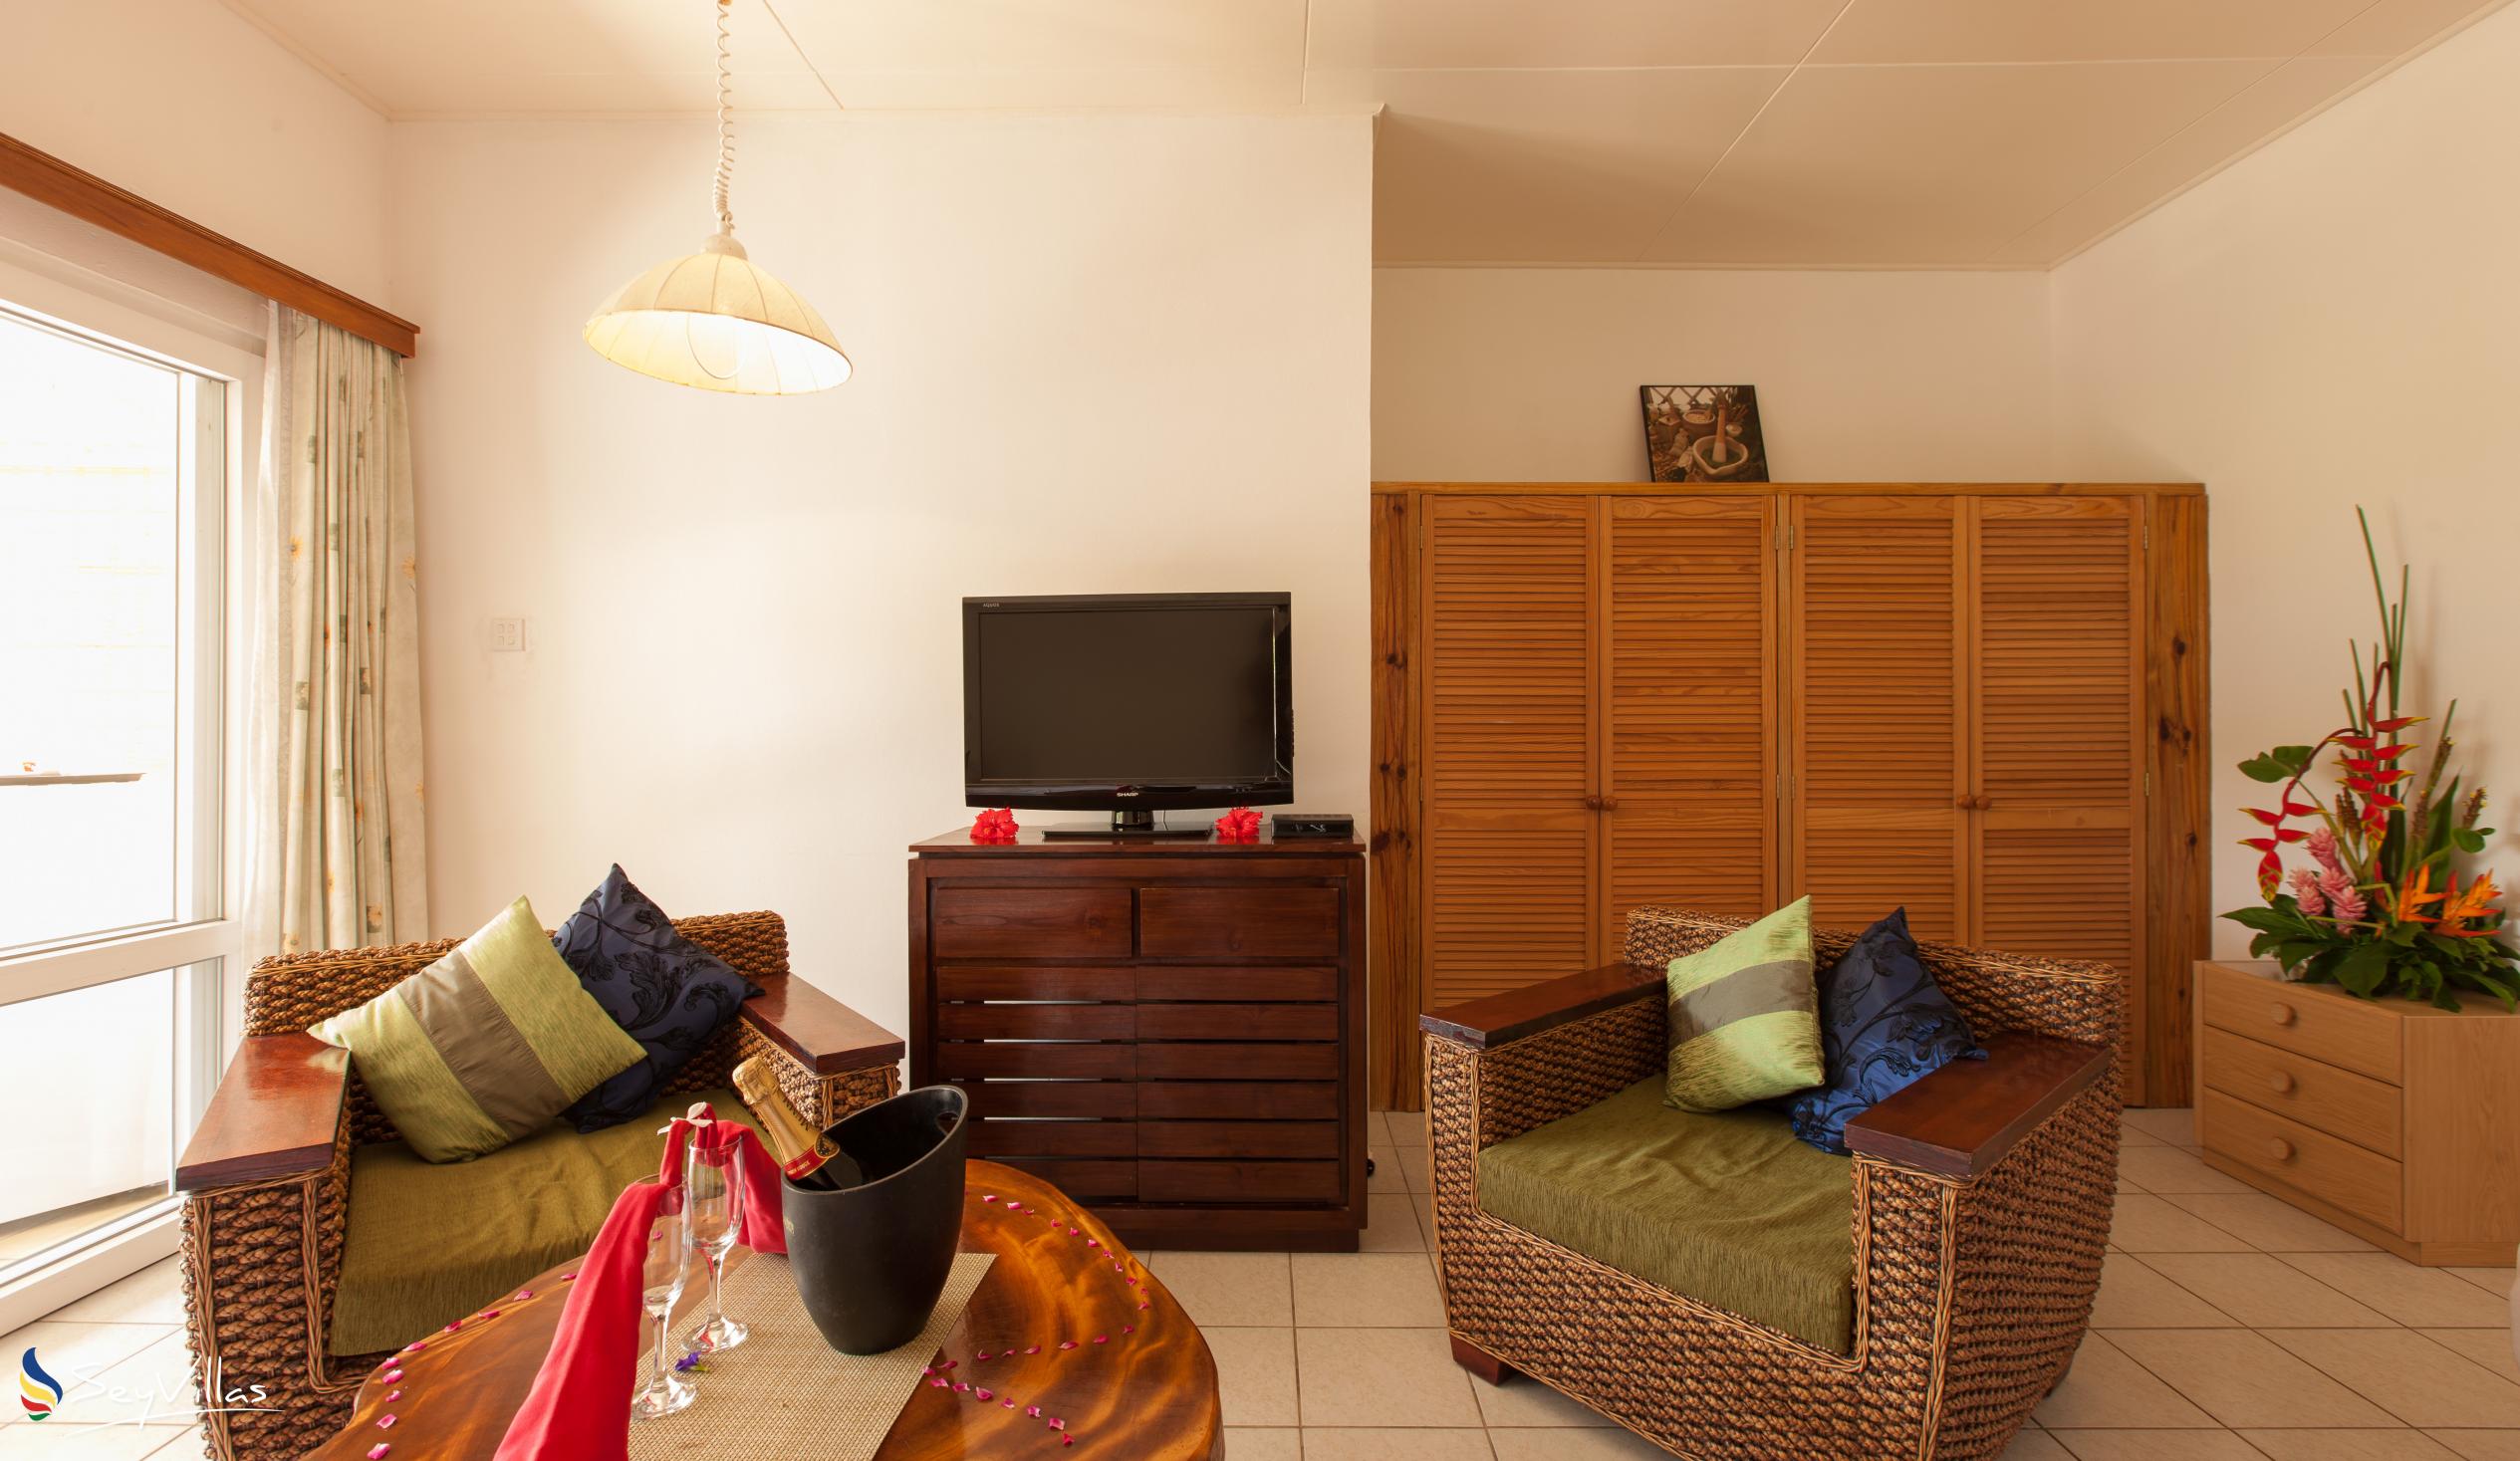 Photo 22: Le Relax St. Joseph Guest House - Superior Room - Praslin (Seychelles)